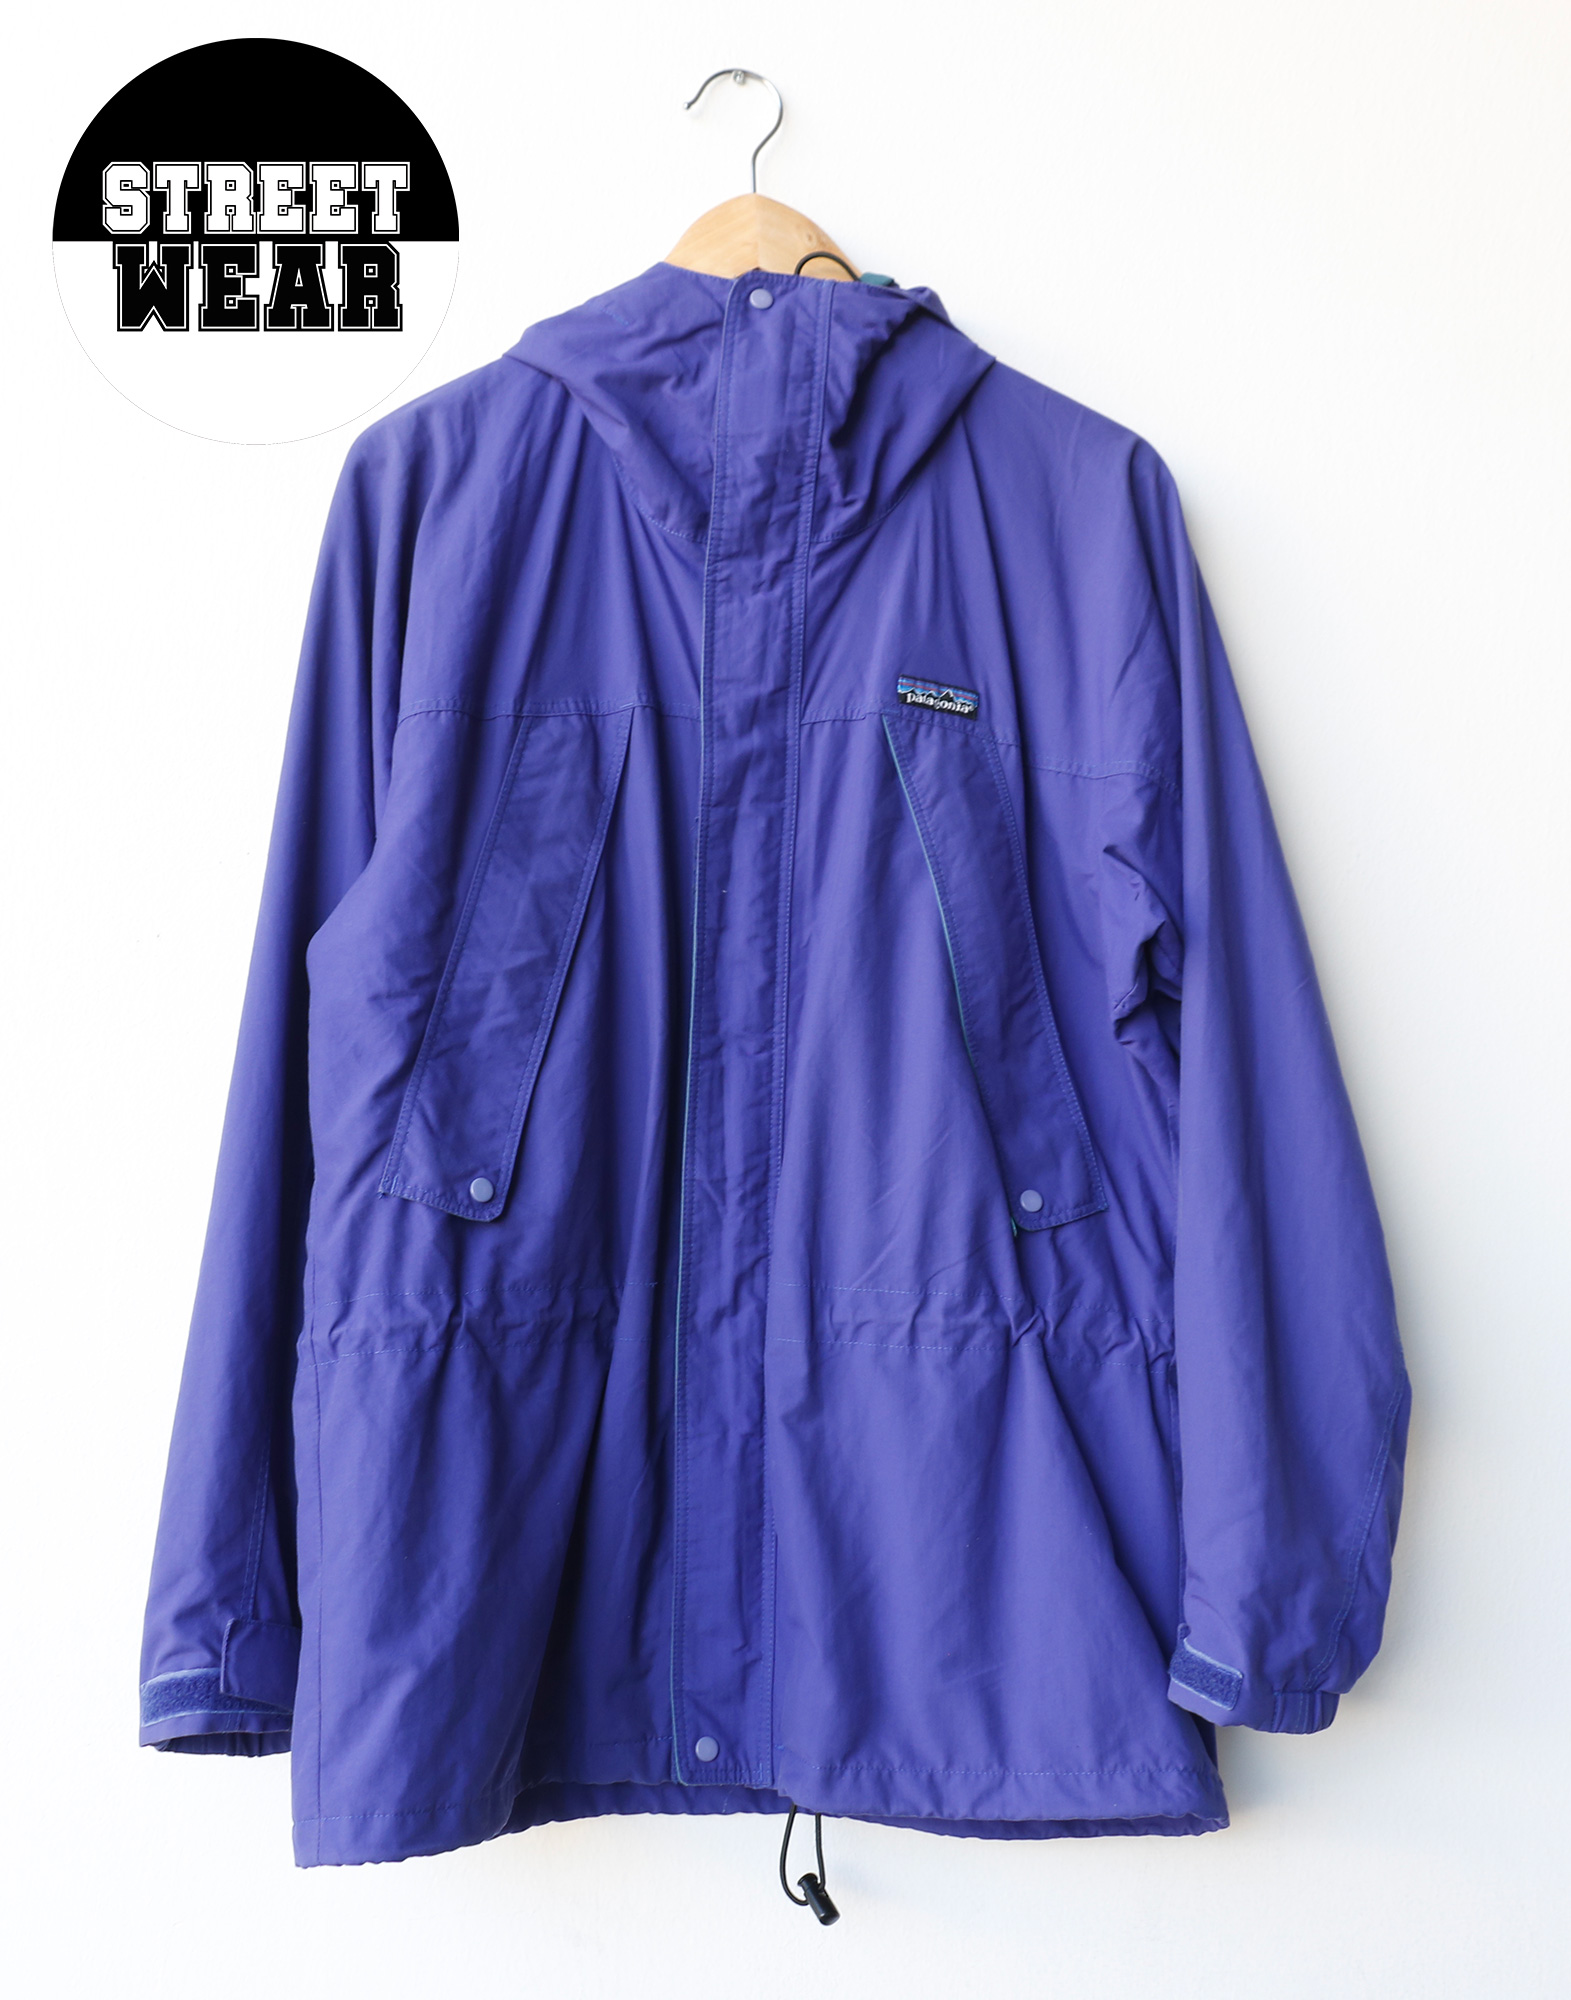 Patagonia - Nylon violet jacket